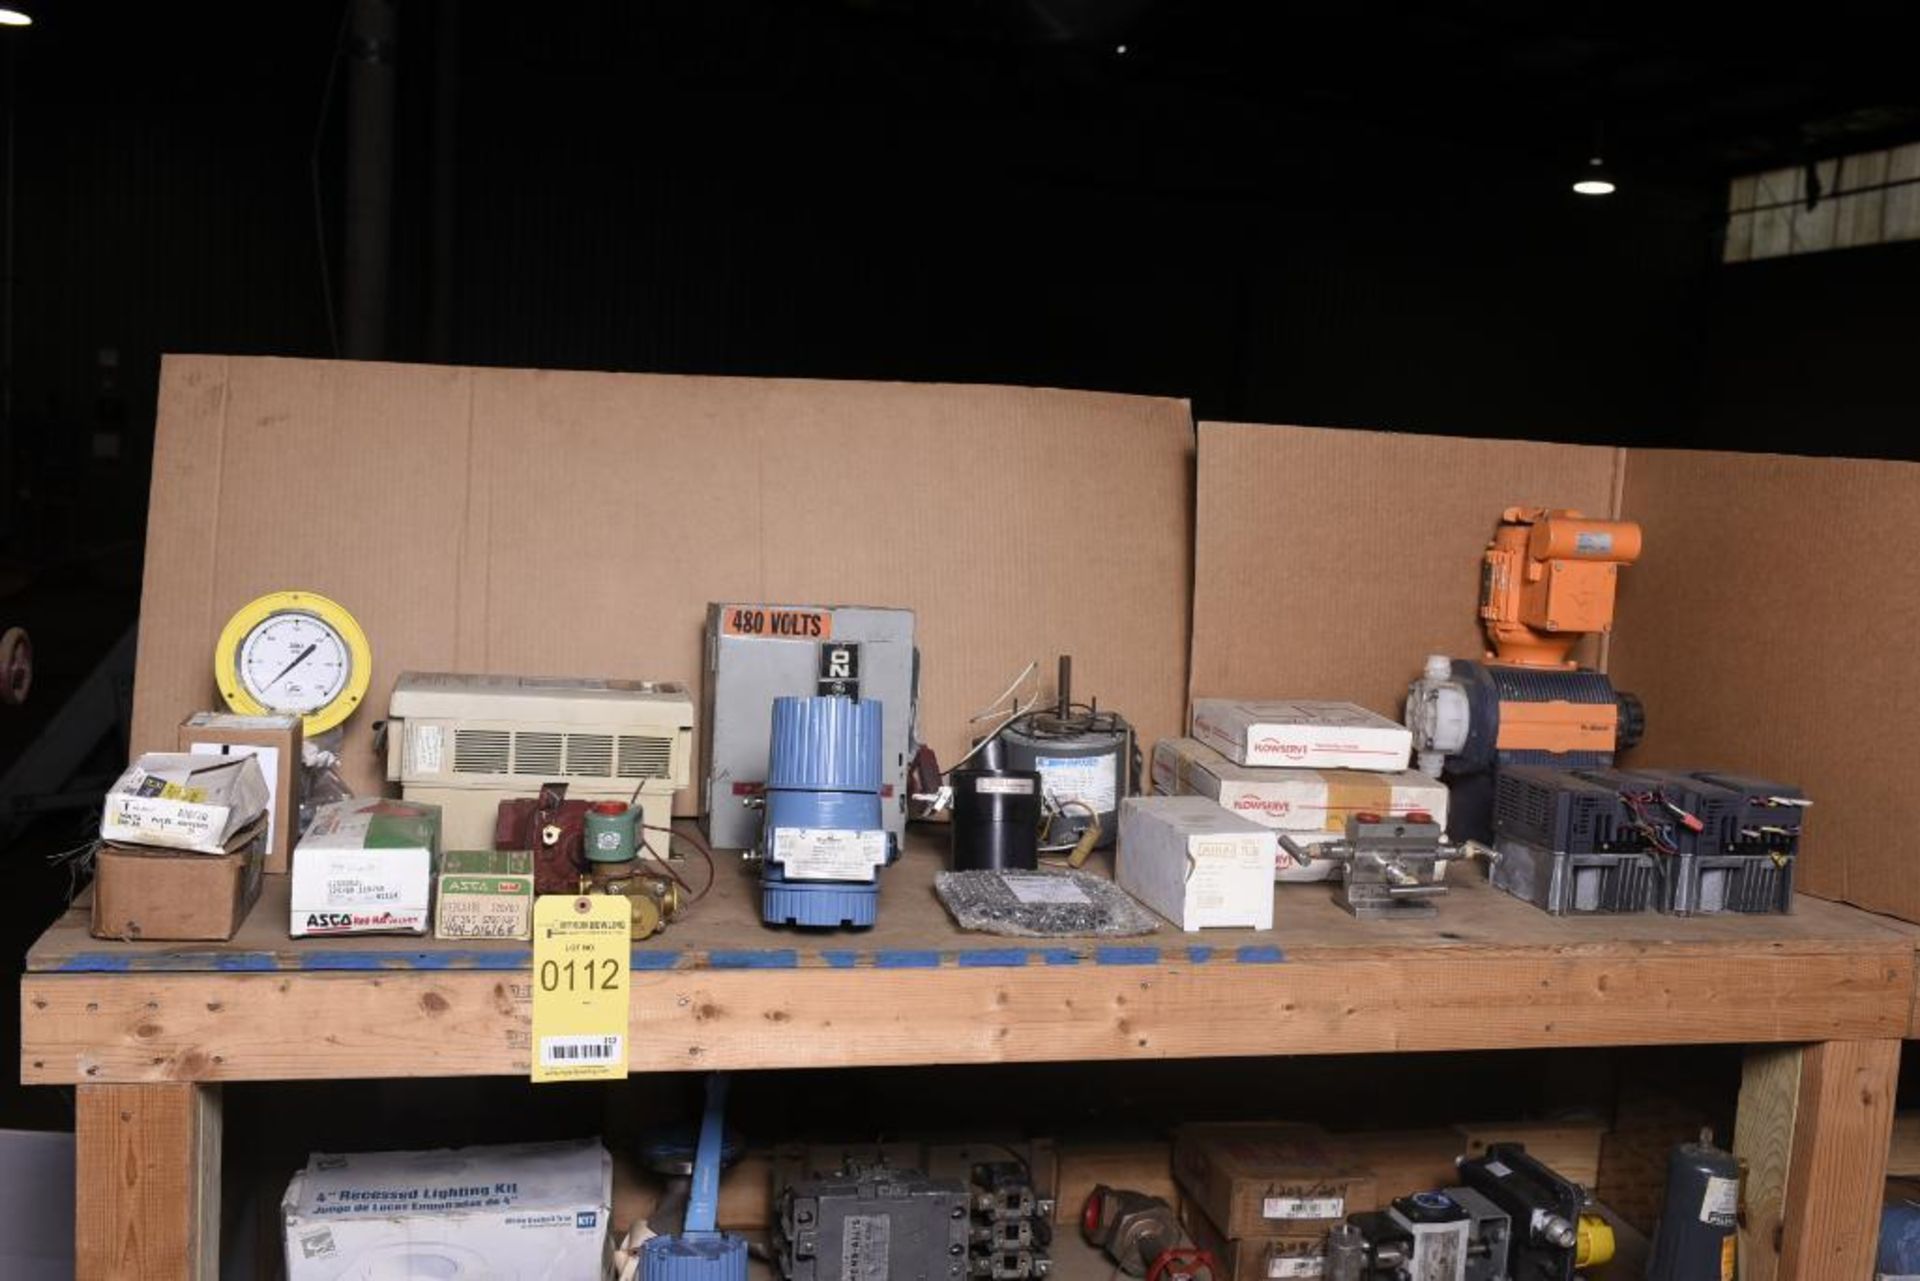 Shelf of Miscellaneous MRO, Valves, Electrical, Motors, Indicators, Pumps (Flowserve, Rosemount, Mit